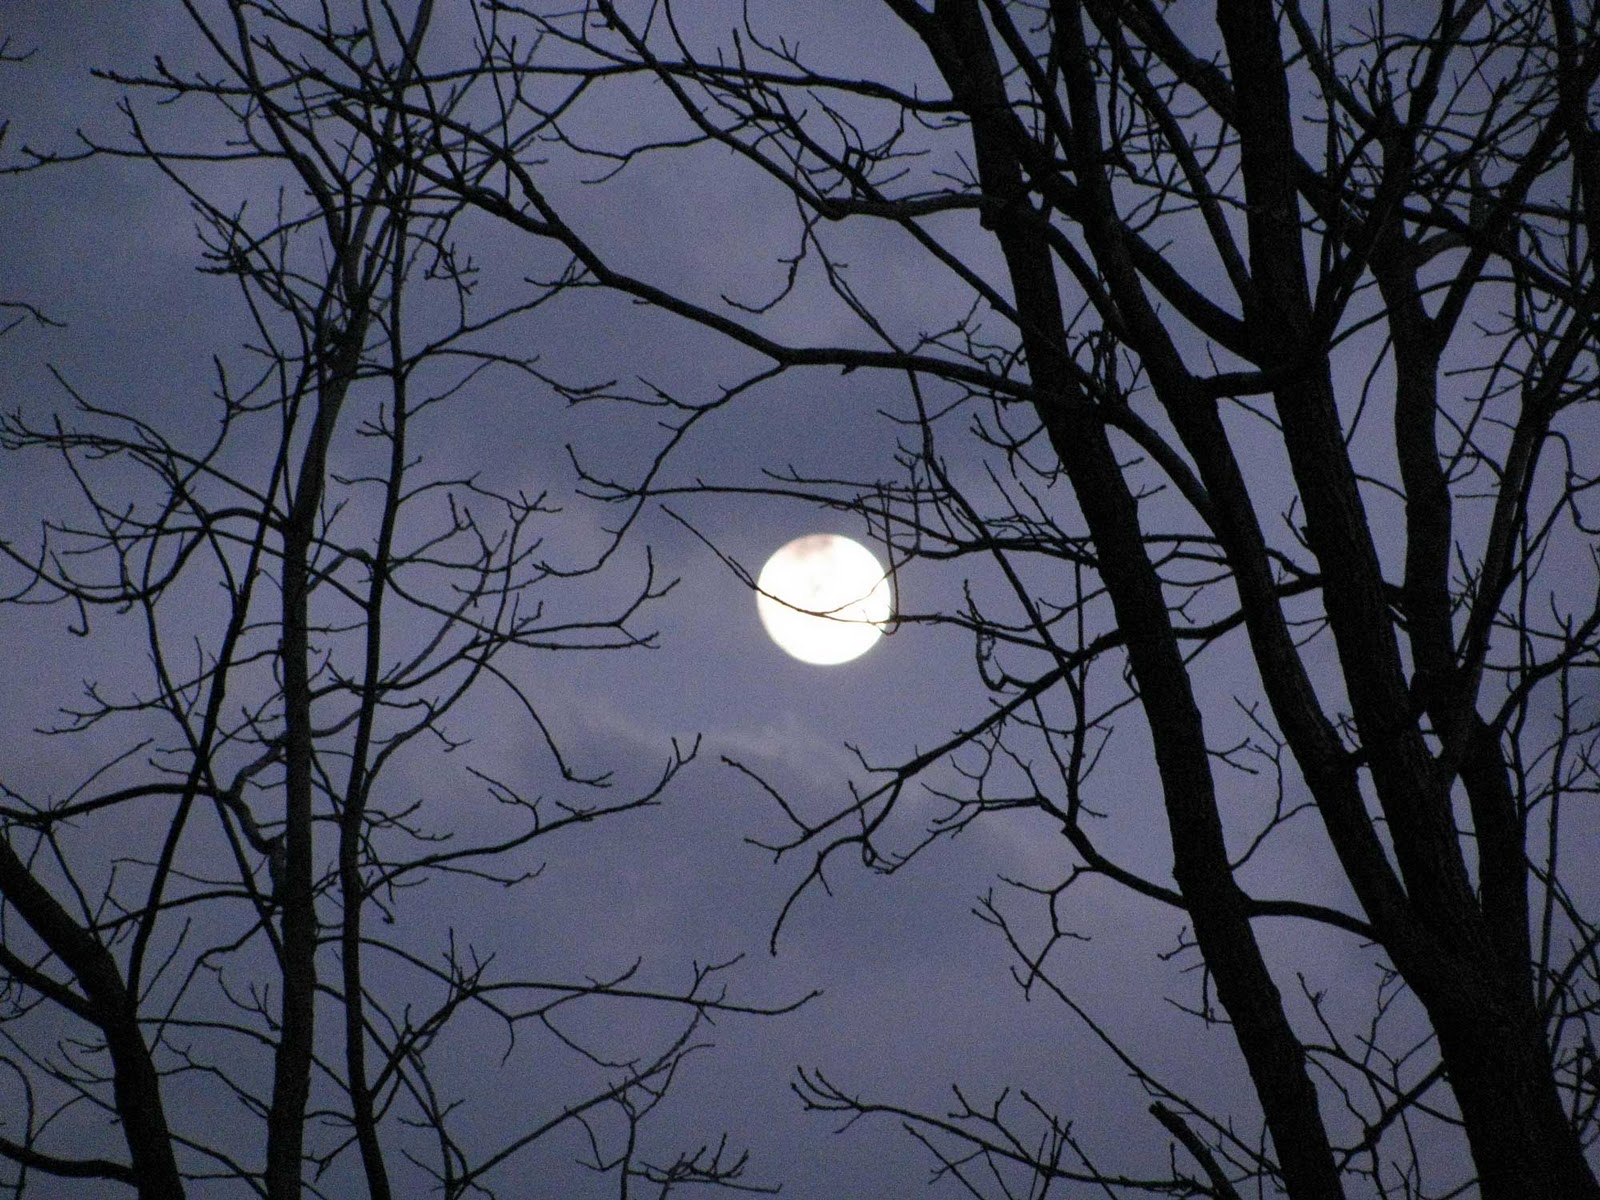 http://3.bp.blogspot.com/-pICEYNNzN9M/TVyZfxGehnI/AAAAAAAAEZM/Hep3PdUzwpk/s1600/February-Full-Moon.jpg